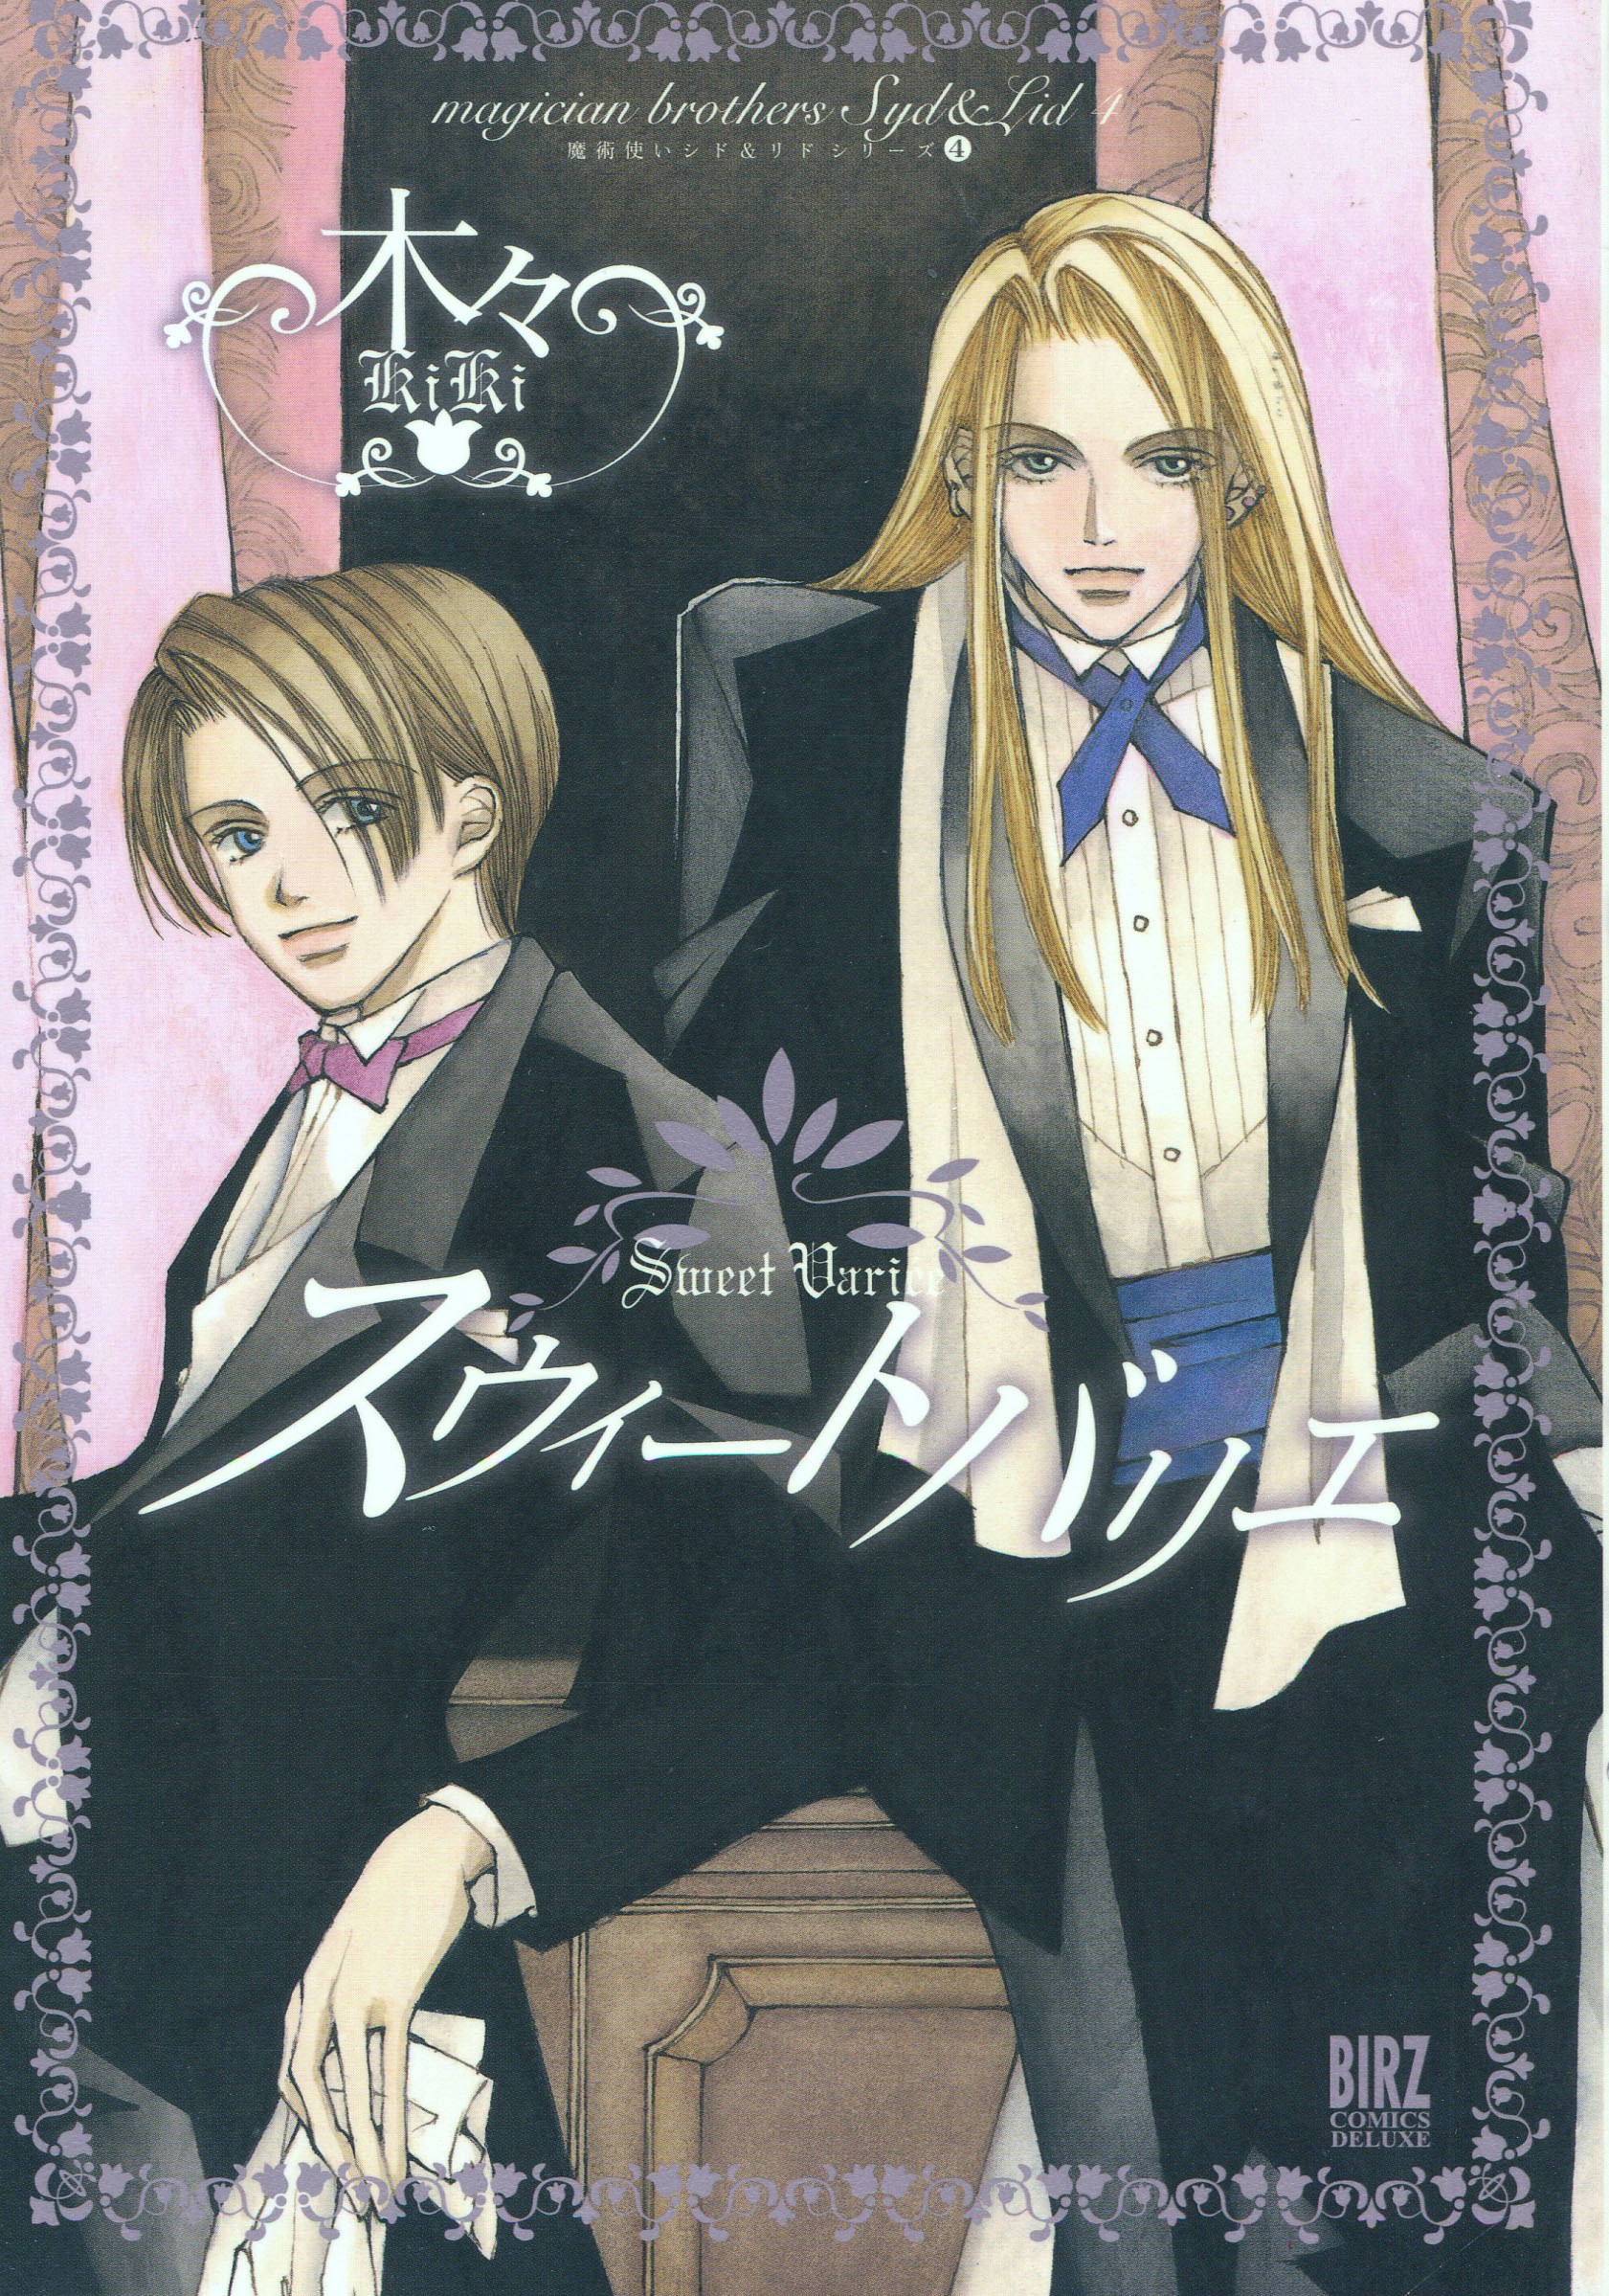 Sweet Variee - Magician Brothers Syd & Lid 4 (Yaoi Manga)